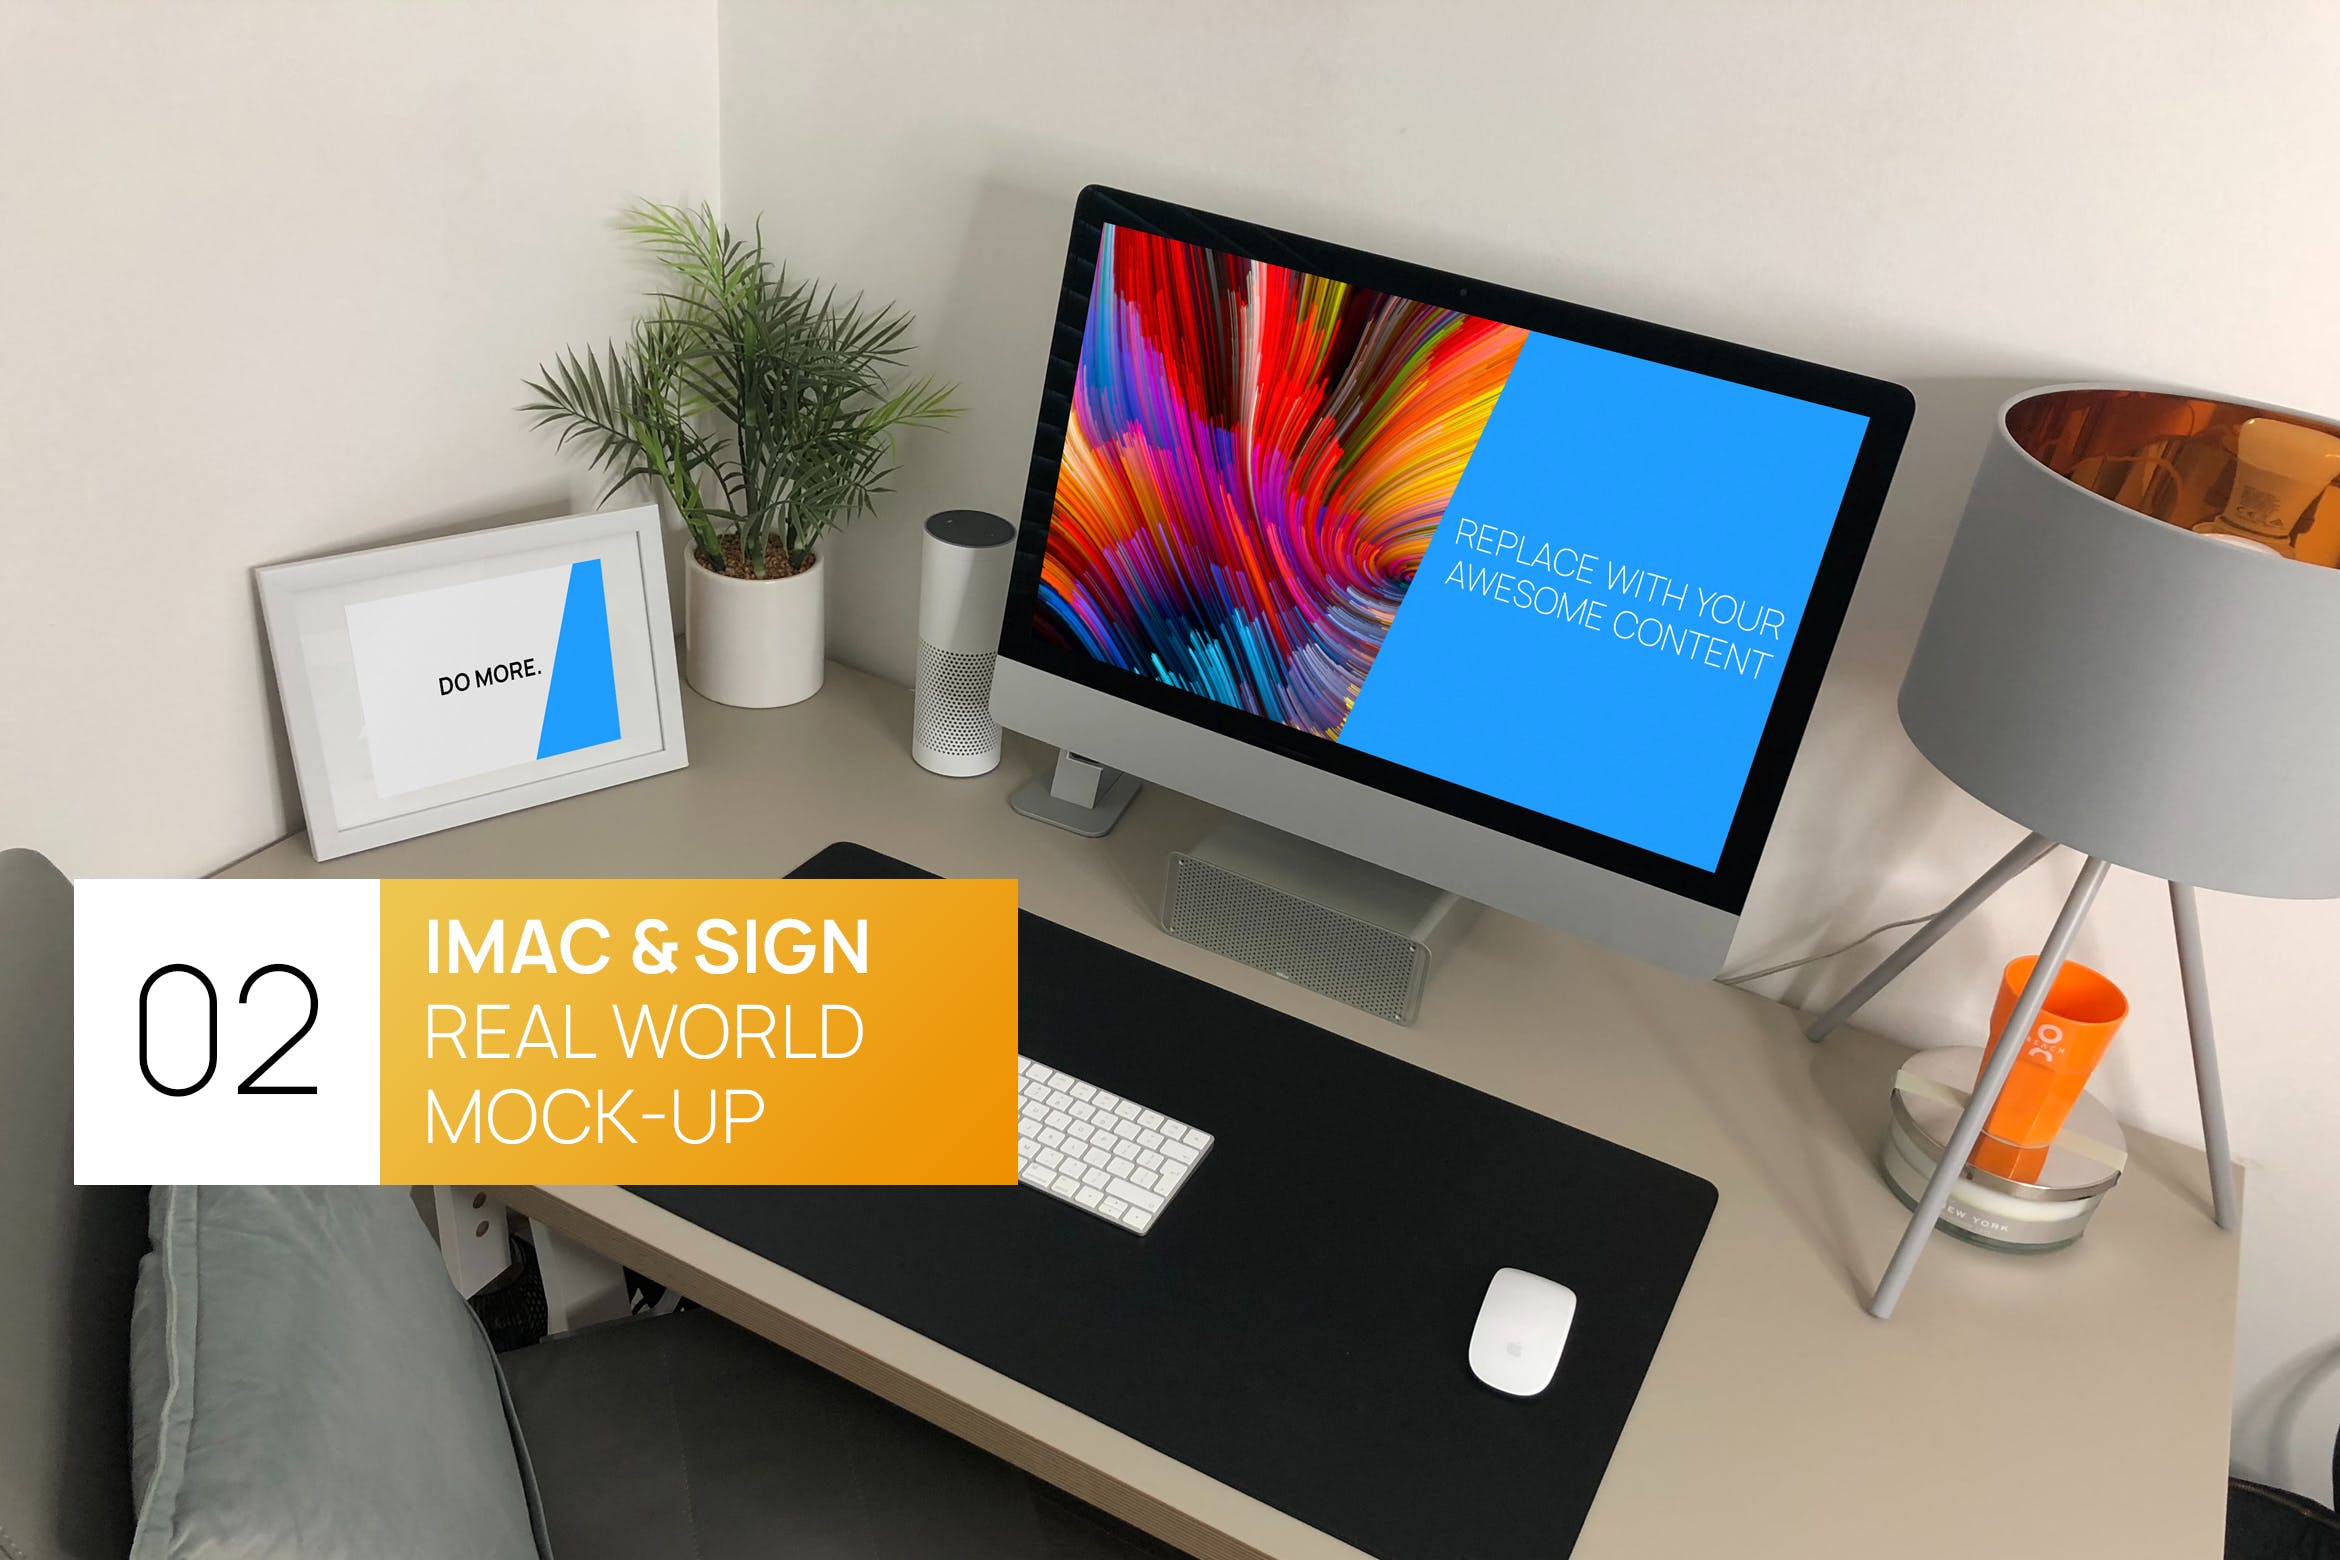 宜家家居风格办公桌场景27寸iMac电脑第一素材精选样机 iMac 27 with Sign Real World Photo Mock-up插图